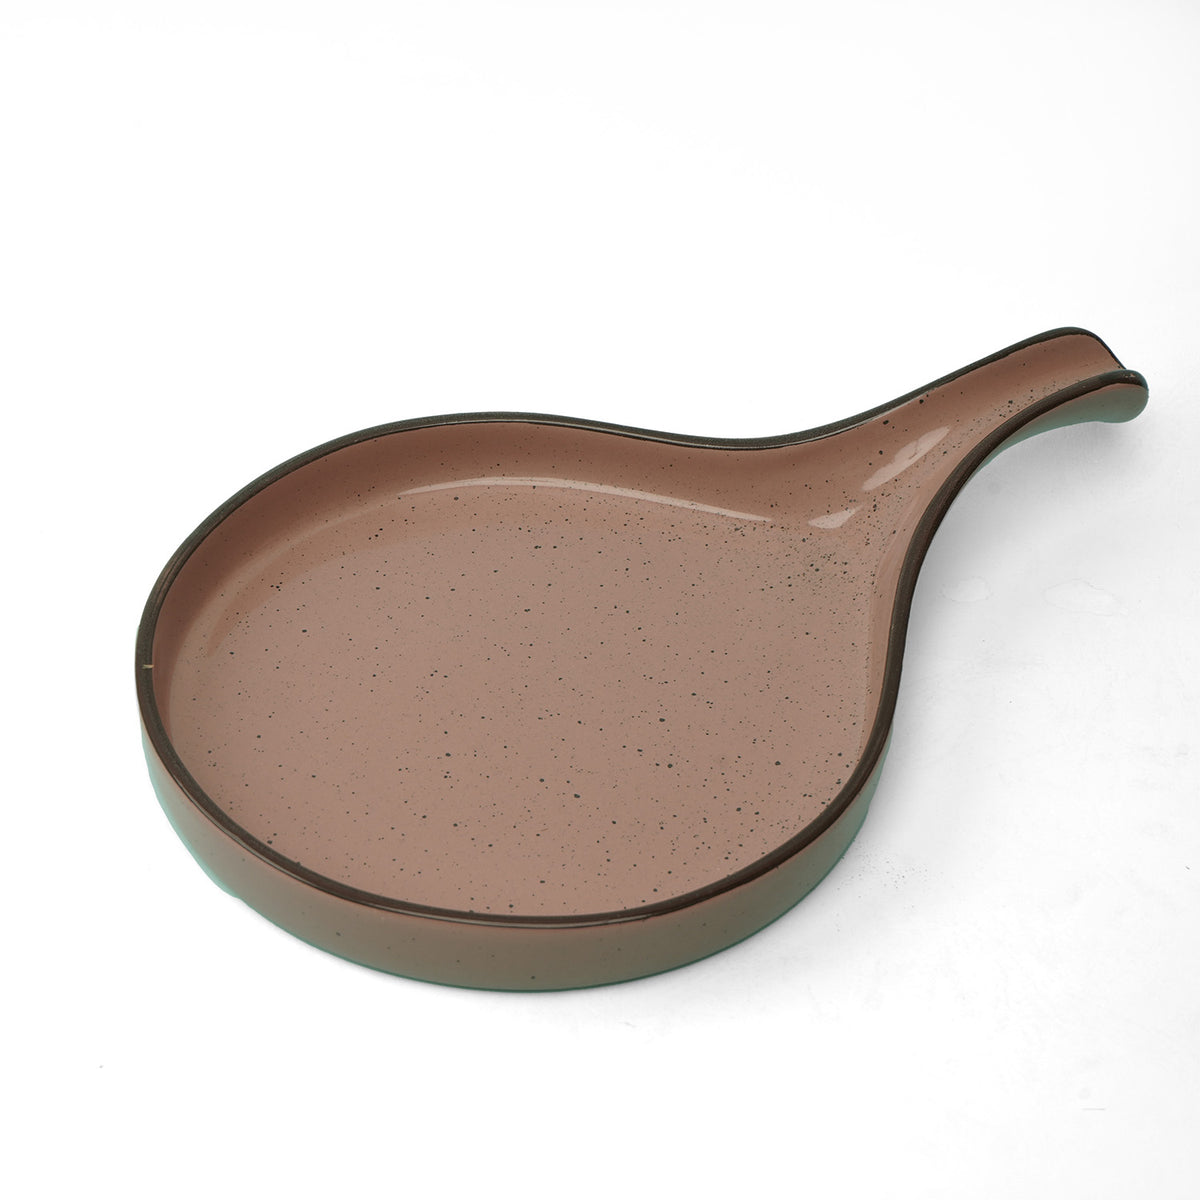 Claymistry Ceramic Dinner & Snacks Light Brown & Dark Brown Edges with Handle Tray, Set of 1 (33cm * 21cm * 3cm) Glossy Finish | Dishwasher & Microwave Safe | Dinnerware Plate Thali | Premium Crockery